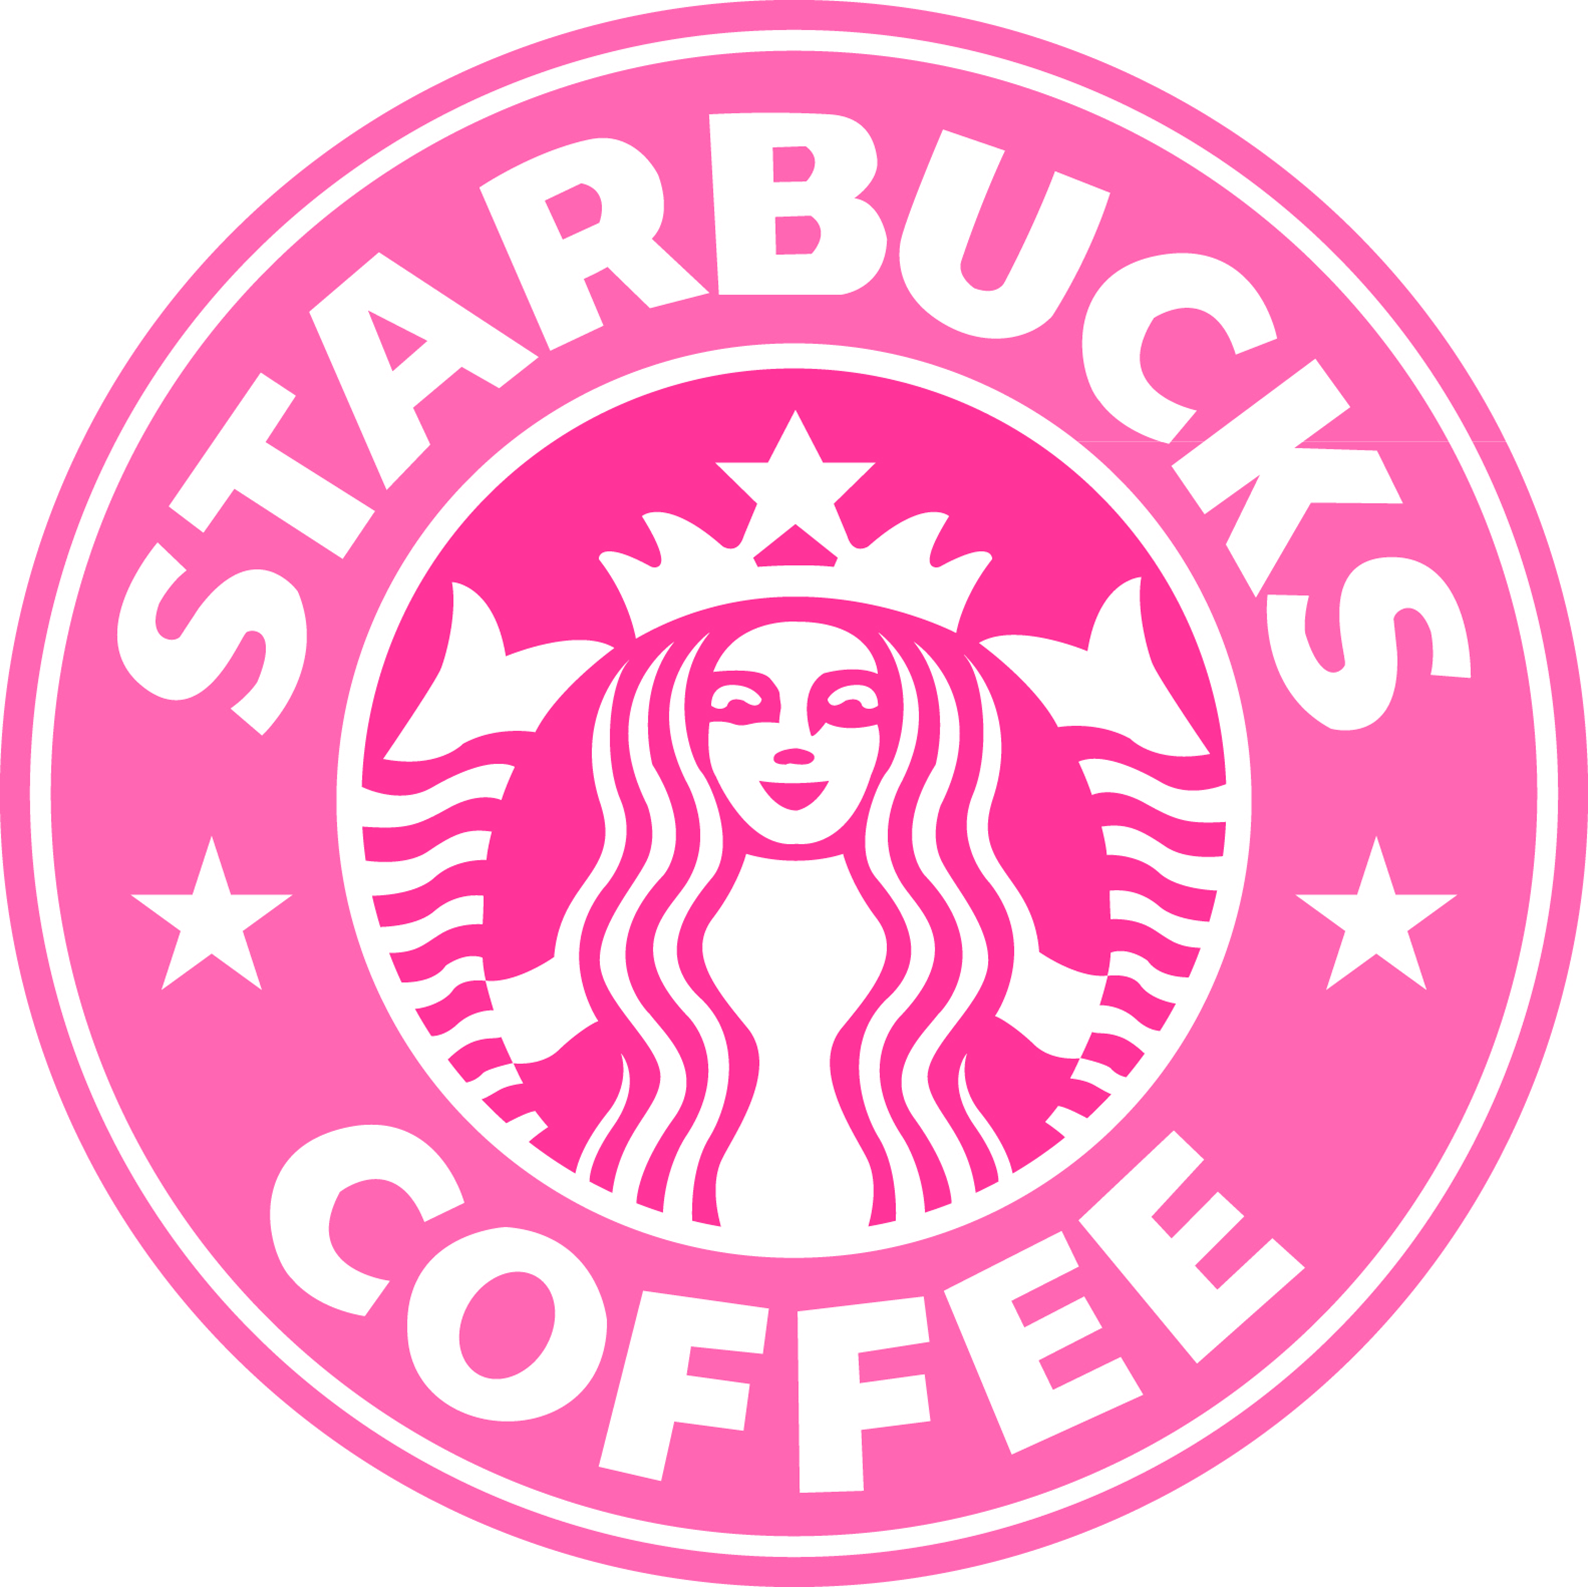 Girly Starbucks Logo - Ended) Starbucks Giveaway | The Marshalls in Texas